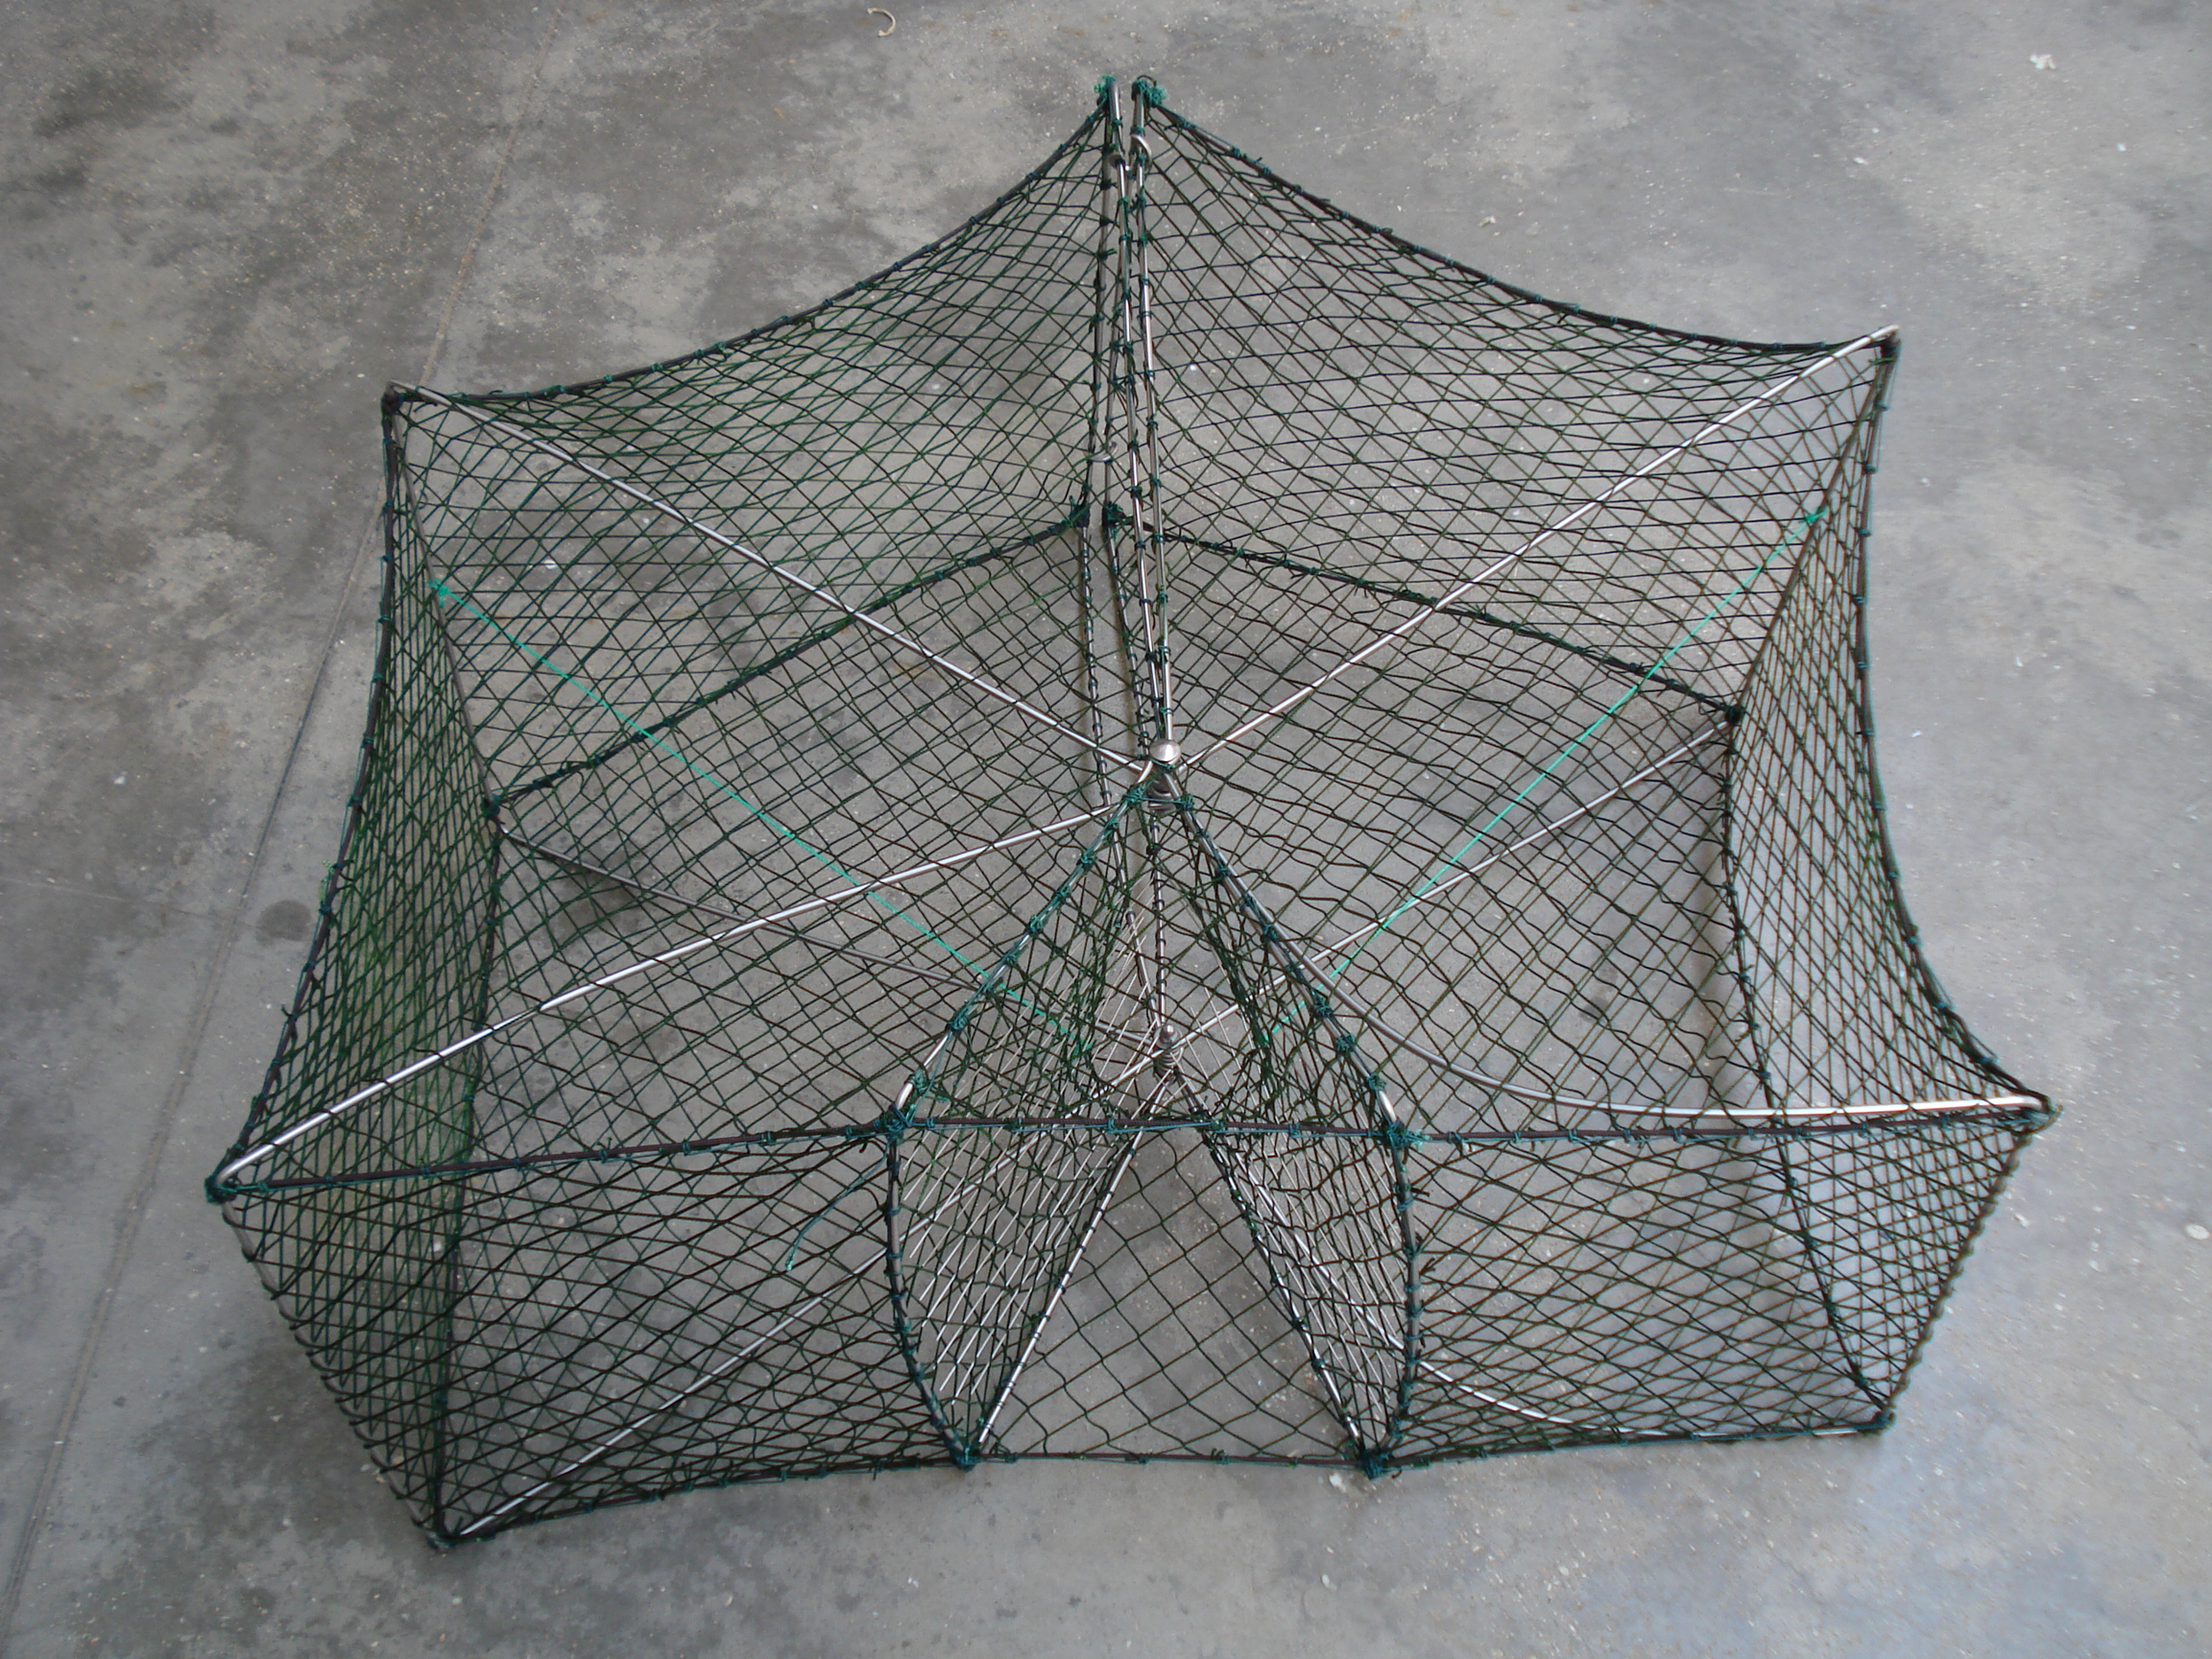 Catch Fish Net Basket Image & Photo (Free Trial), fish net